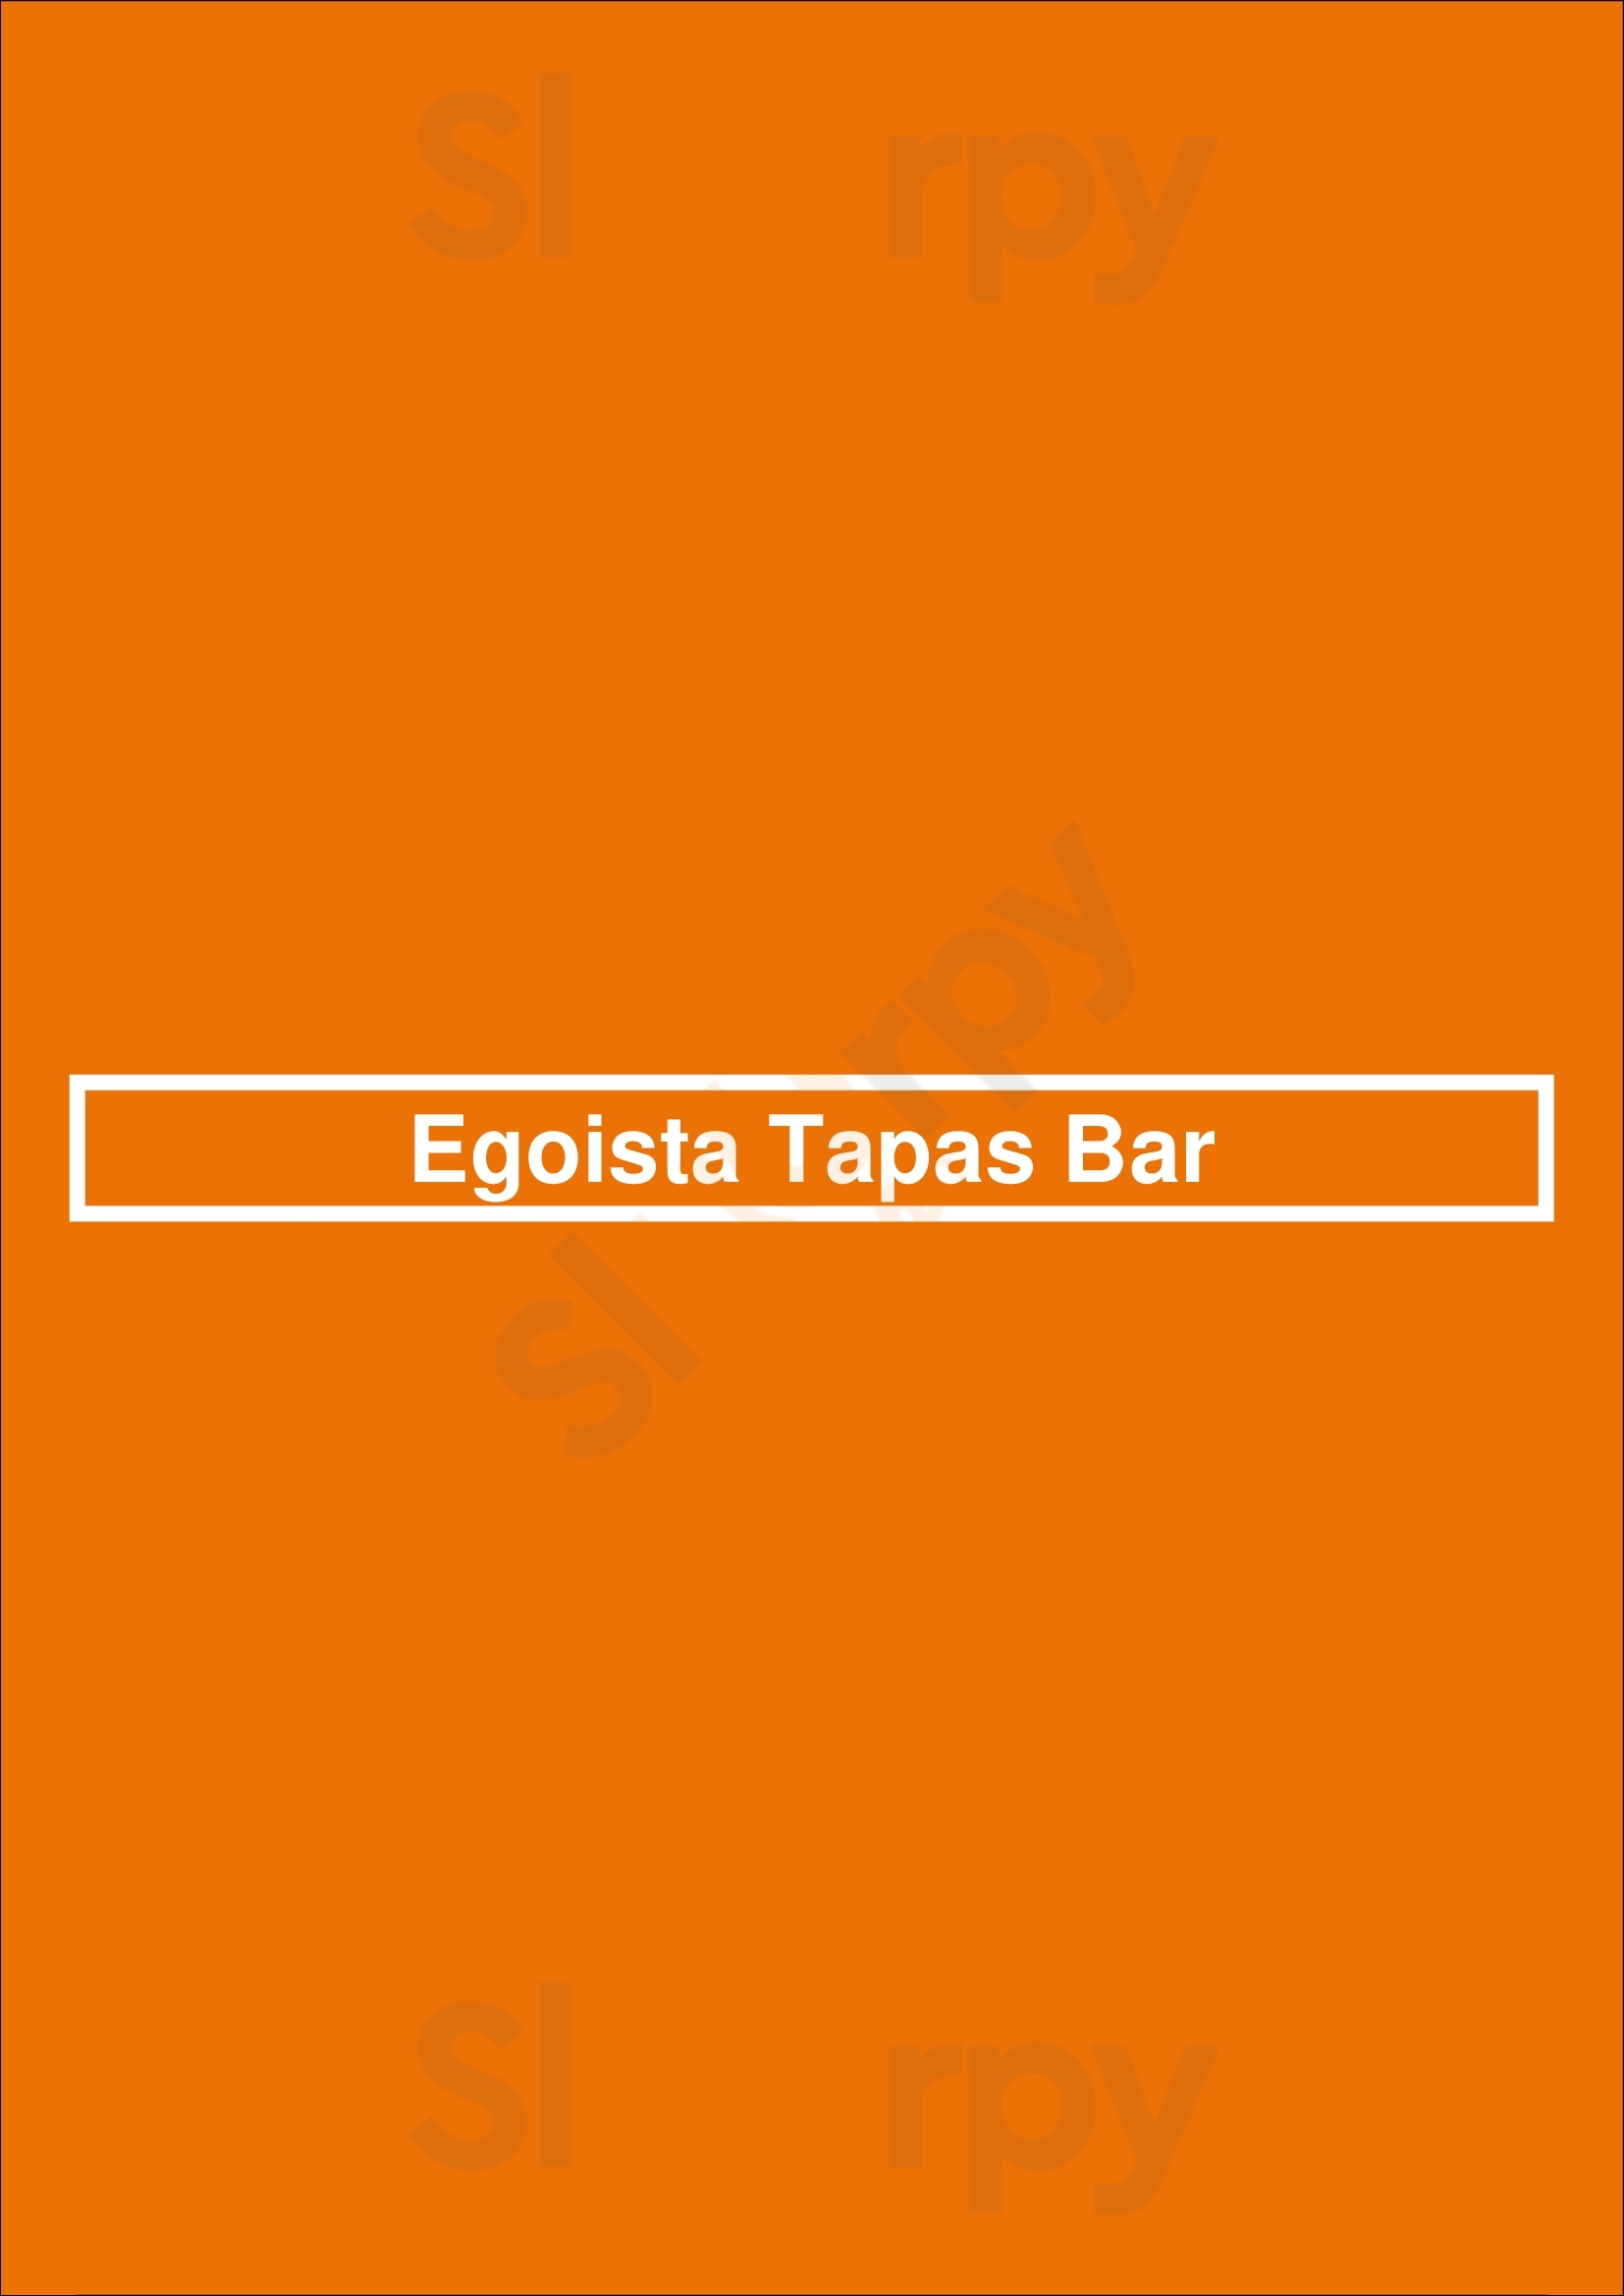 Egoista Tapas Bar Porto Menu - 1